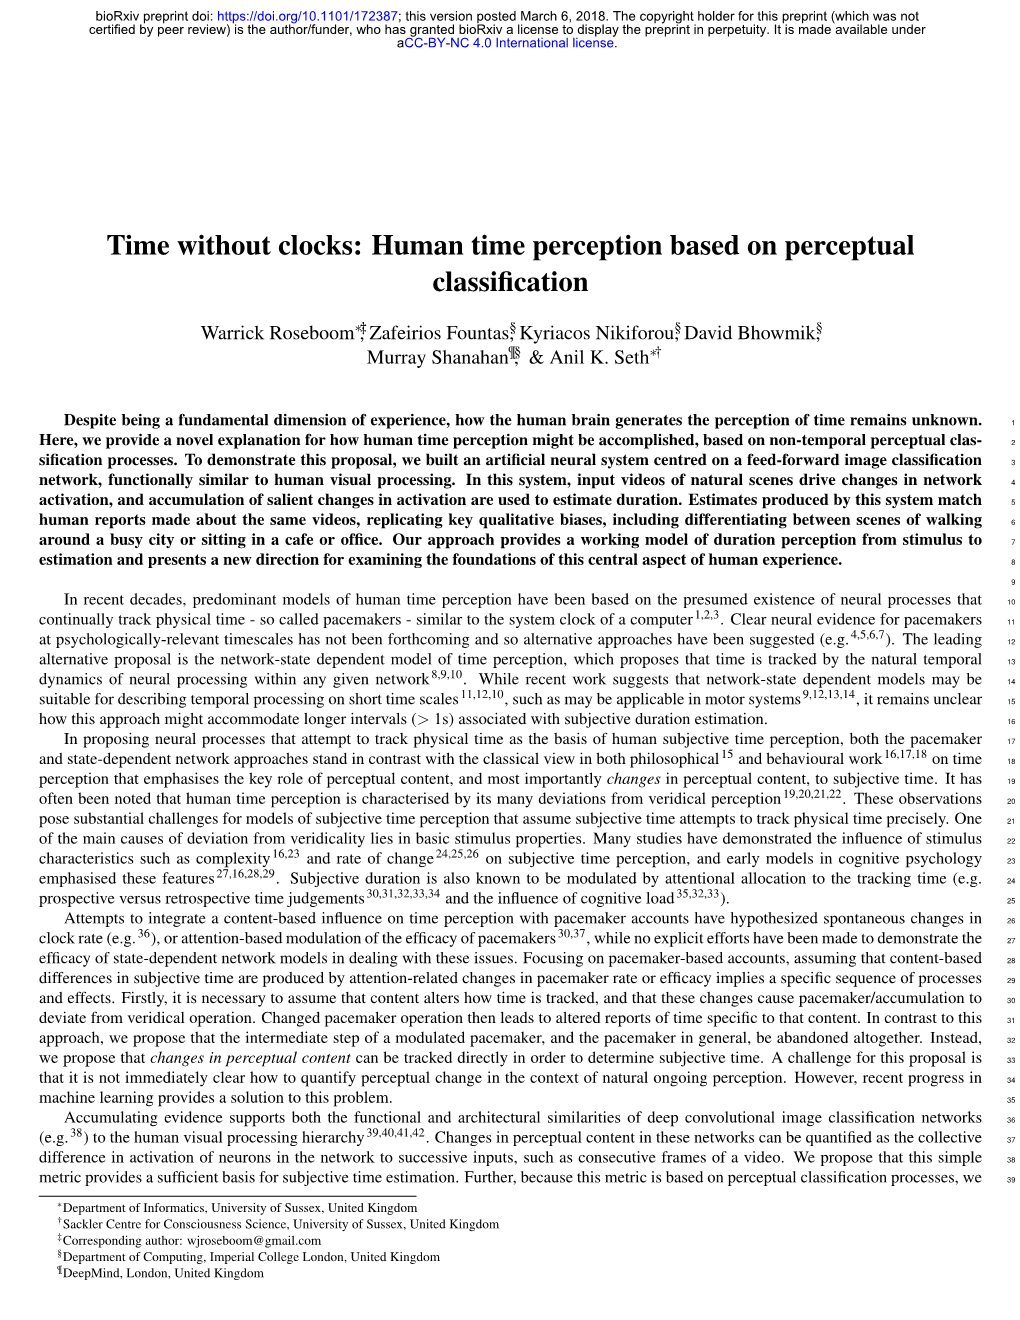 Human Time Perception Based on Perceptual Classification